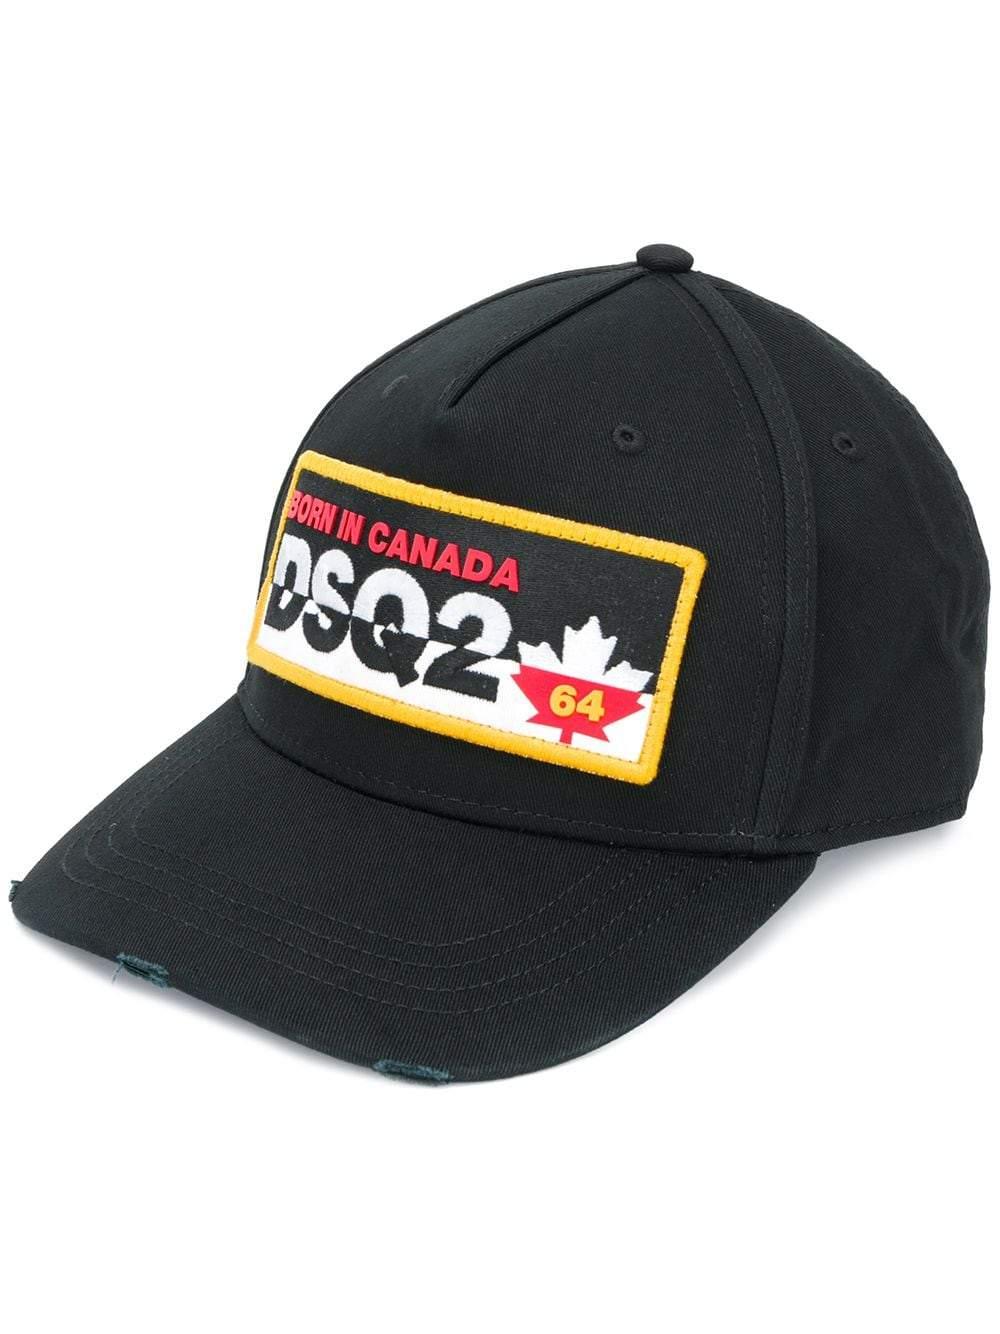 born In Canada' Box Logo Cap Black 